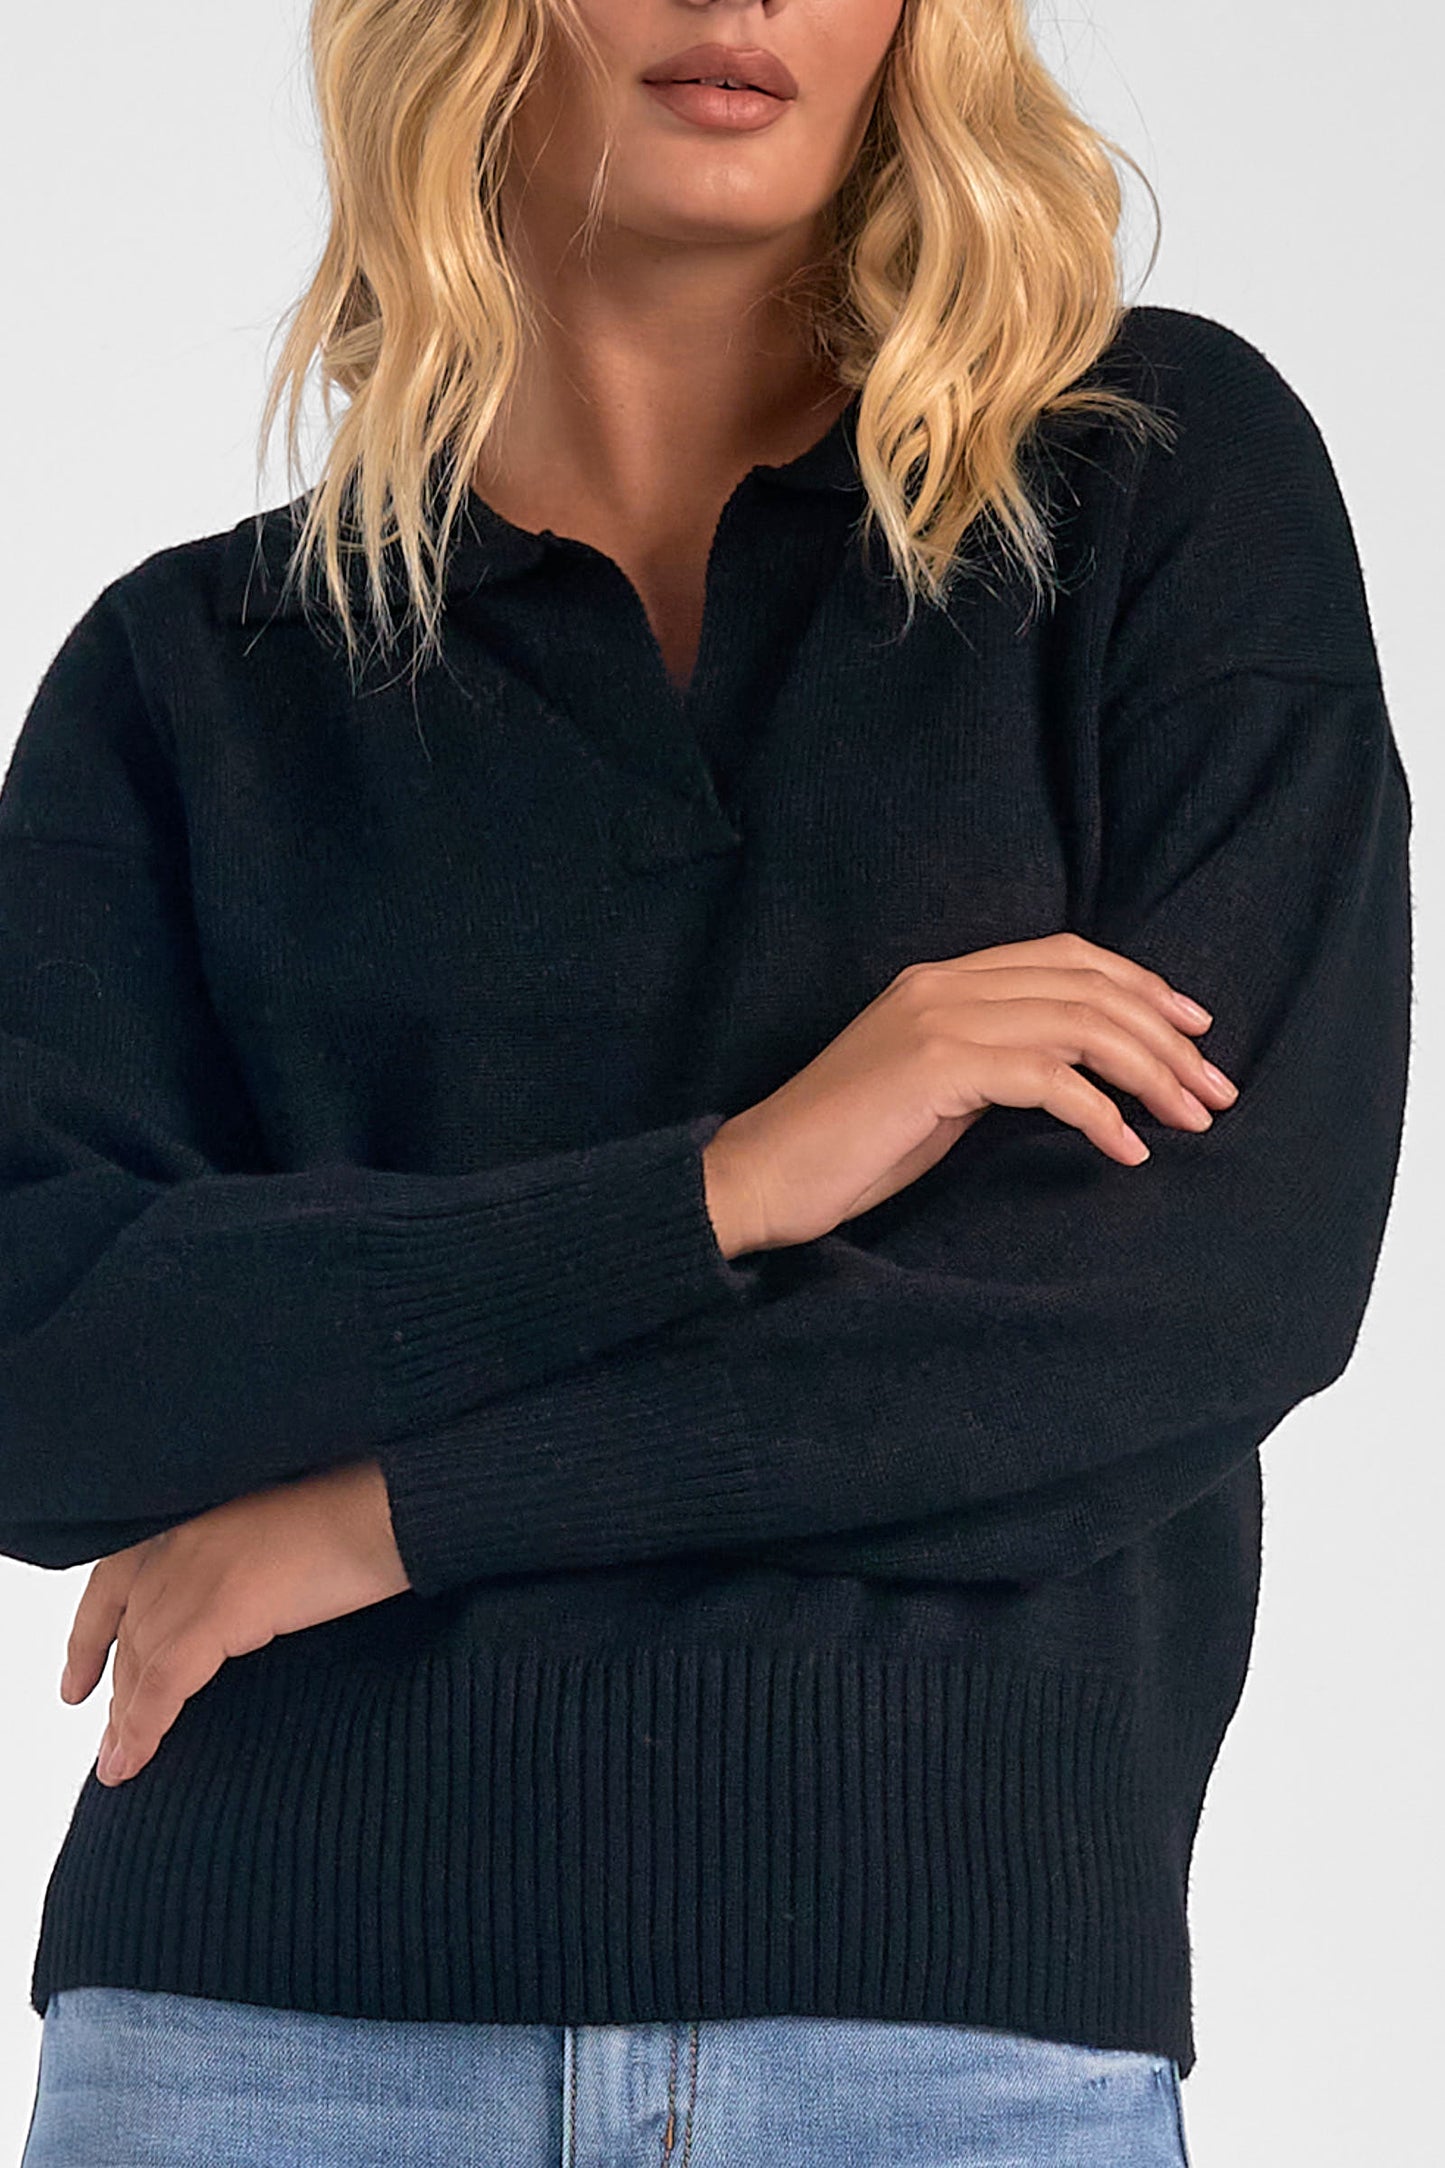 Black V-Neck Collared Sweater